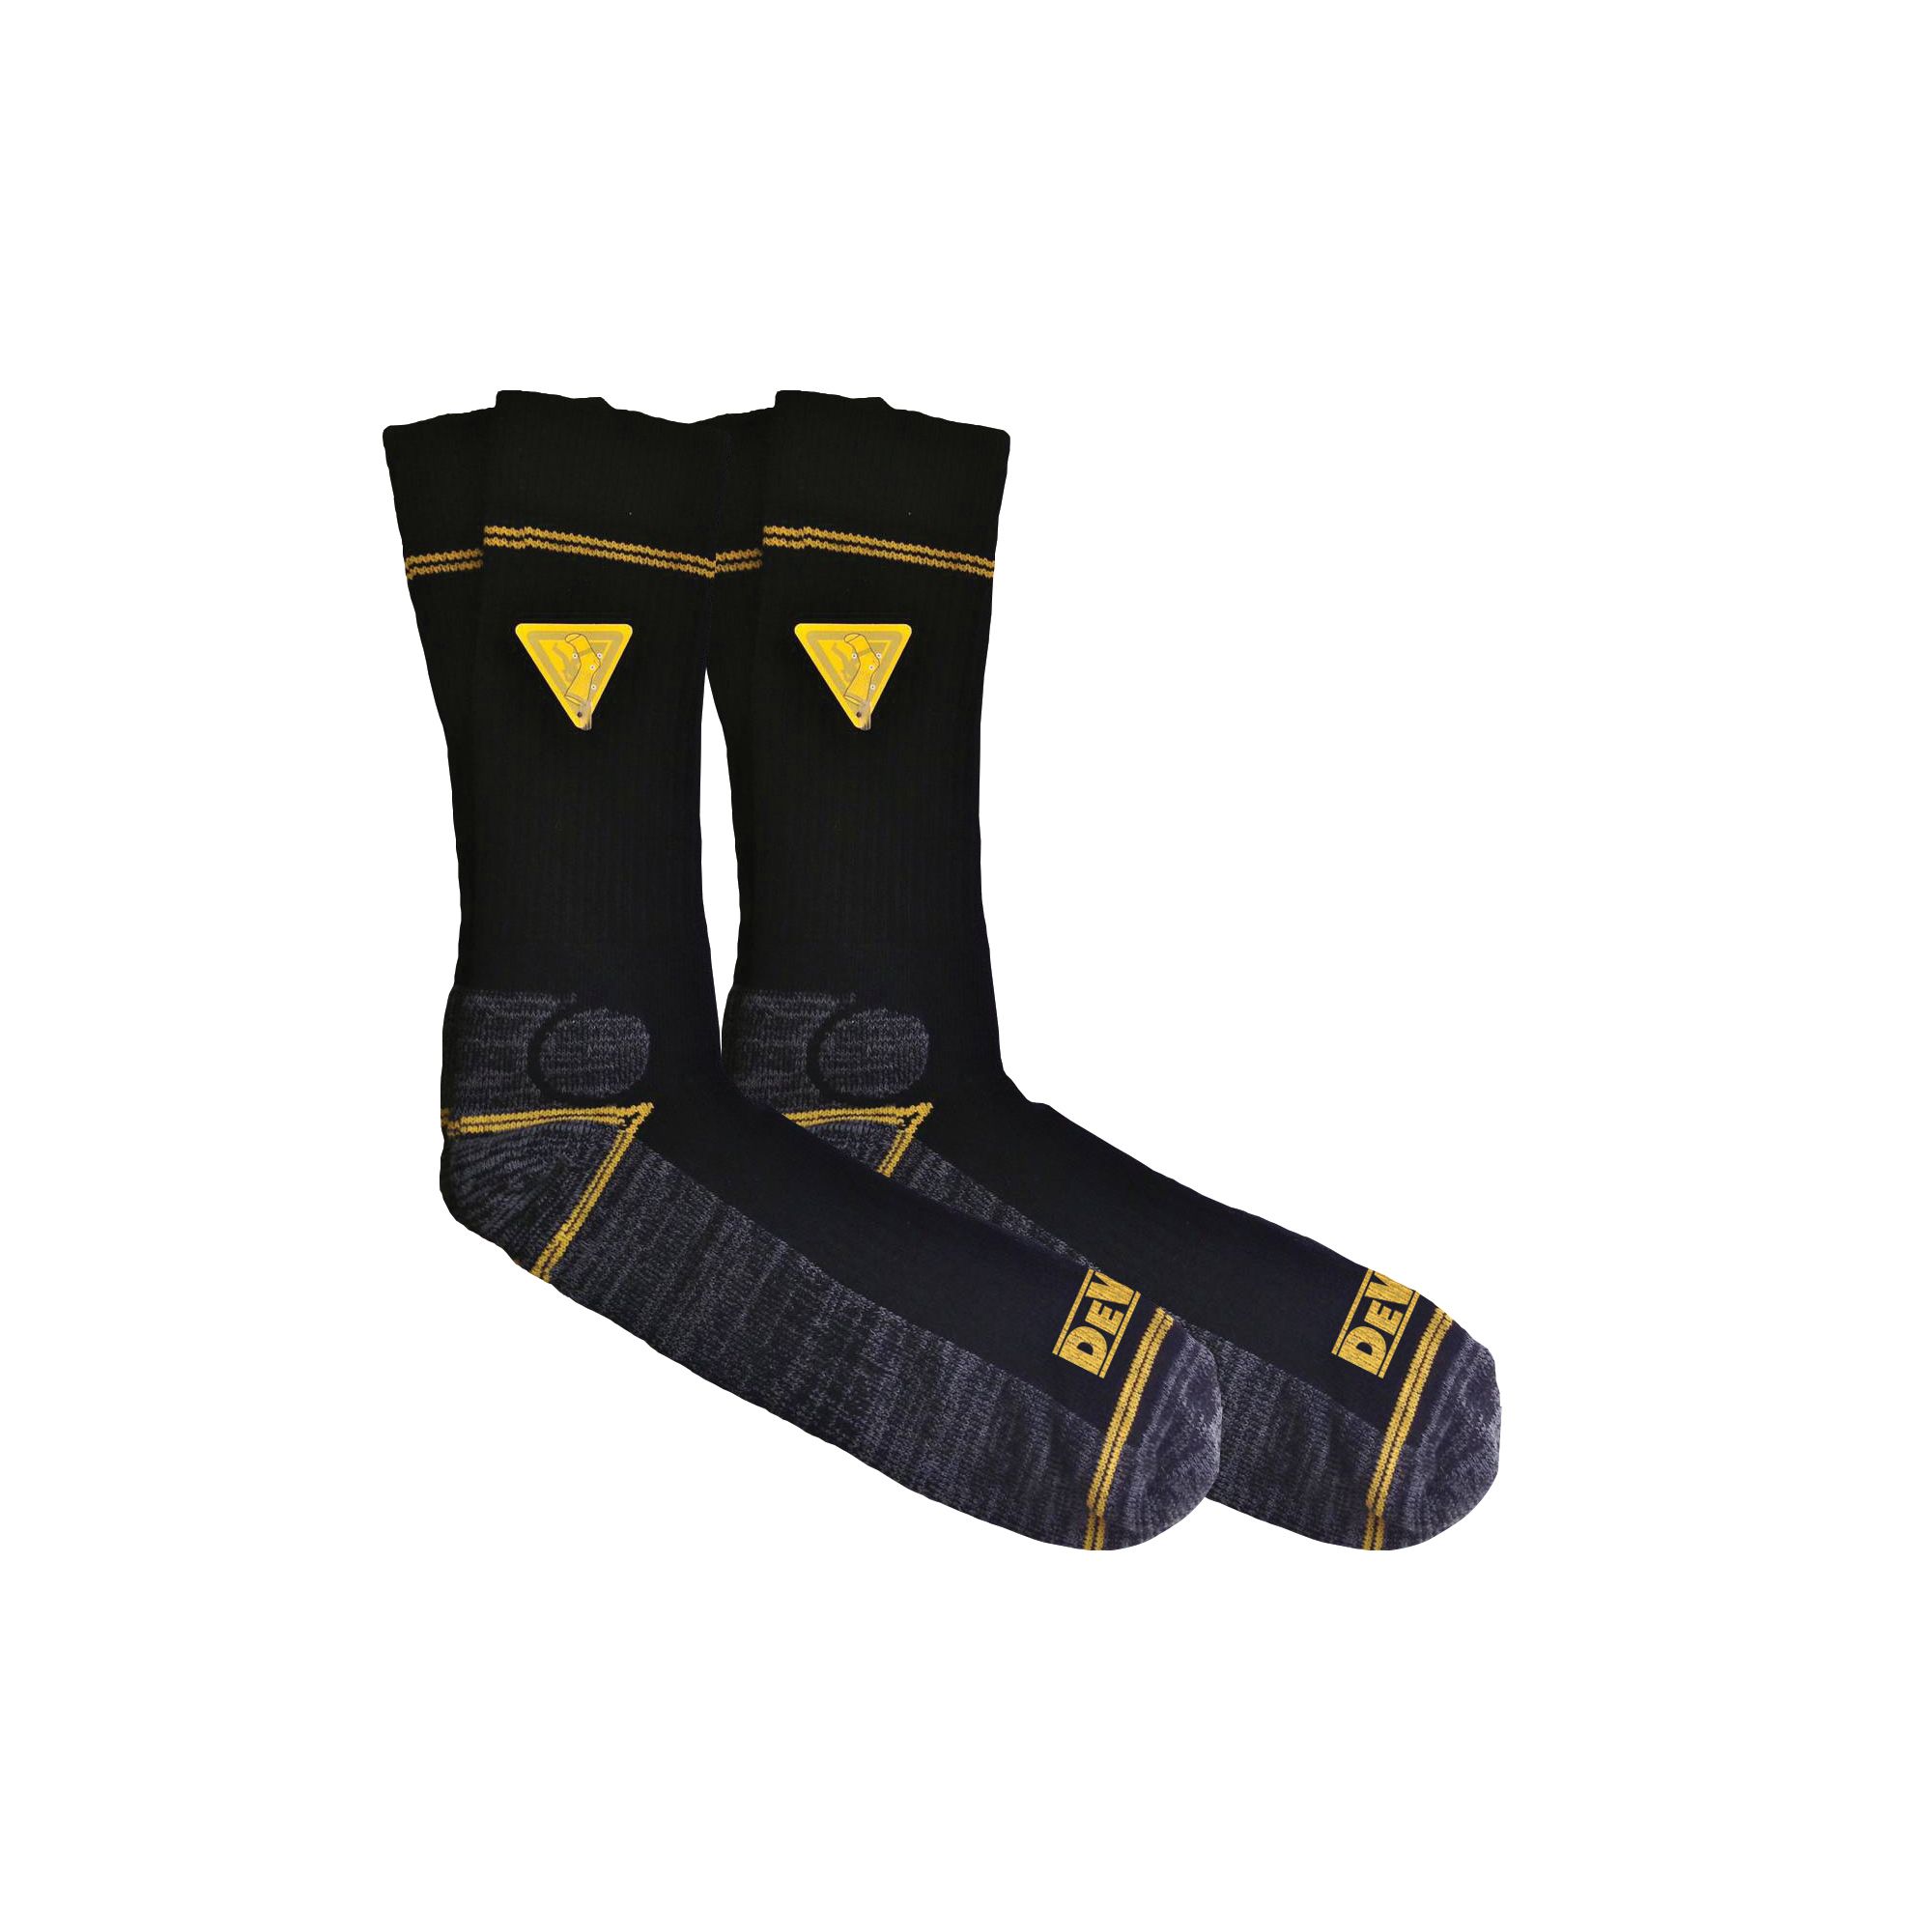 DeWalt Black, grey & yellow Socks One size, 1 Pair